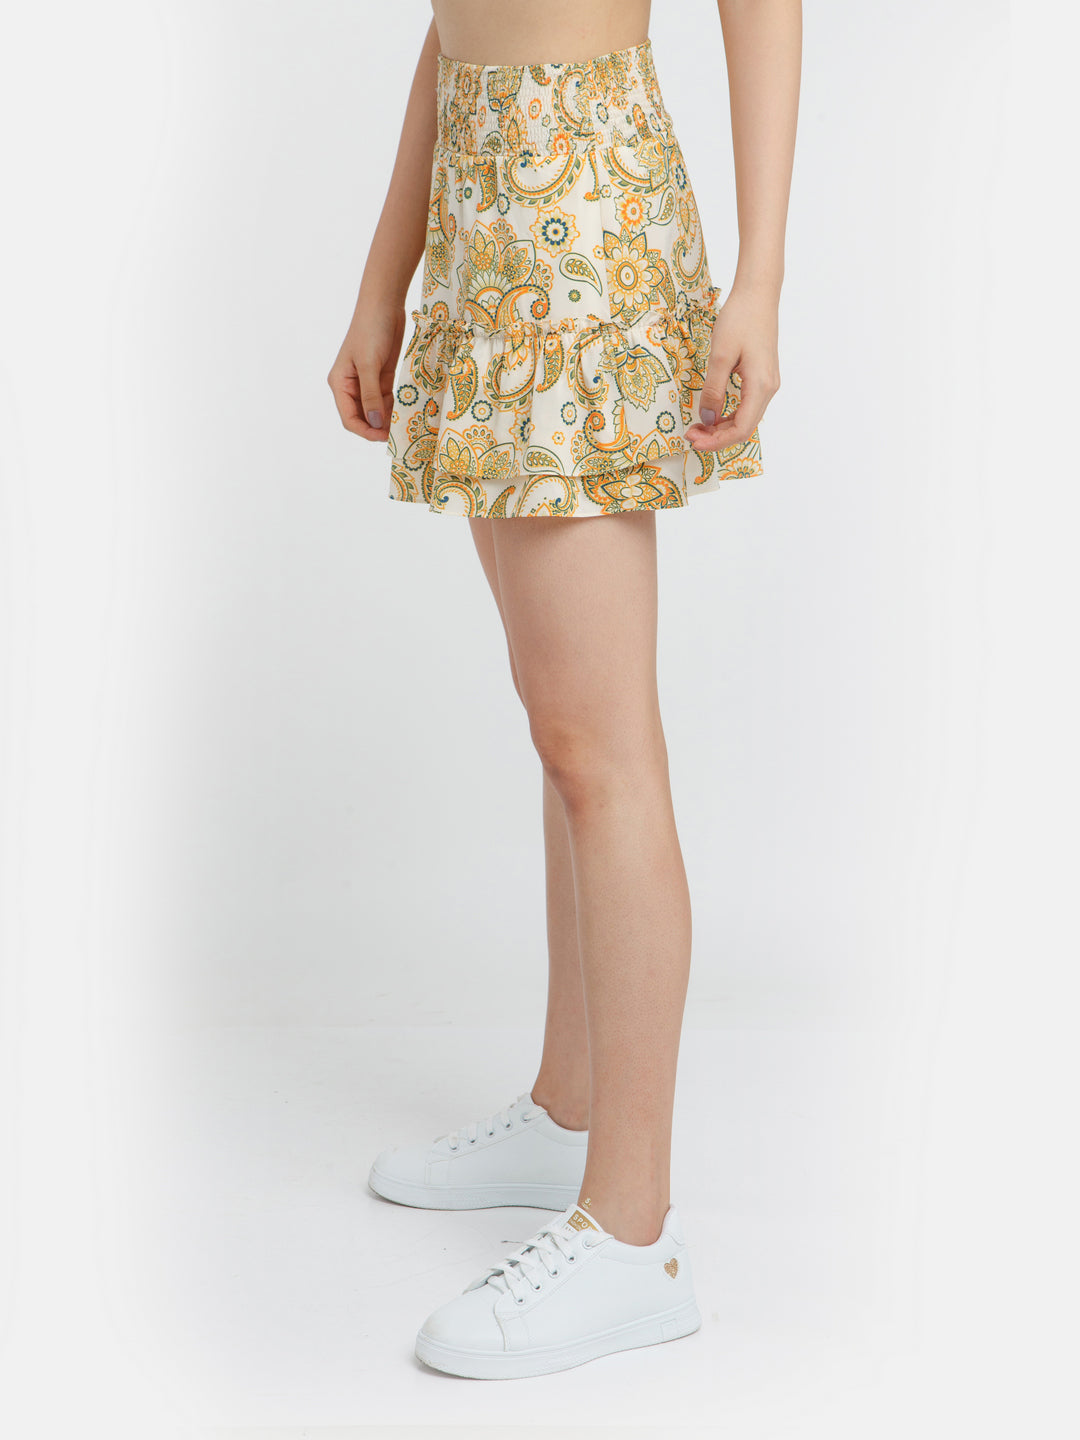 Multi-Colored-Bohemian-Printed-Flared-Mini-Skirt-VSK00304-3